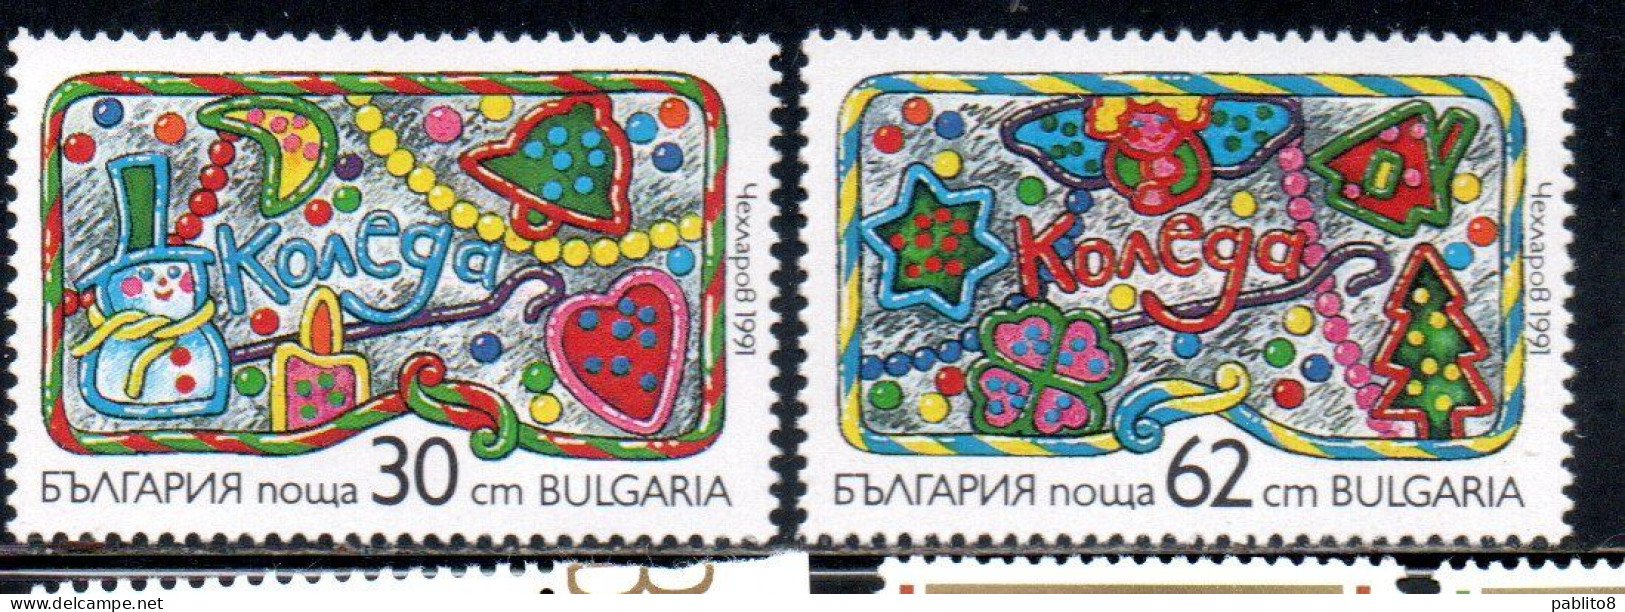 BULGARIA BULGARIE BULGARIEN 1991 CHRISTMAS NATALE NOEL WEIHNACHTEN NAVIDAD COMPLETE SET SERIE COMPLETA MNH - Unused Stamps